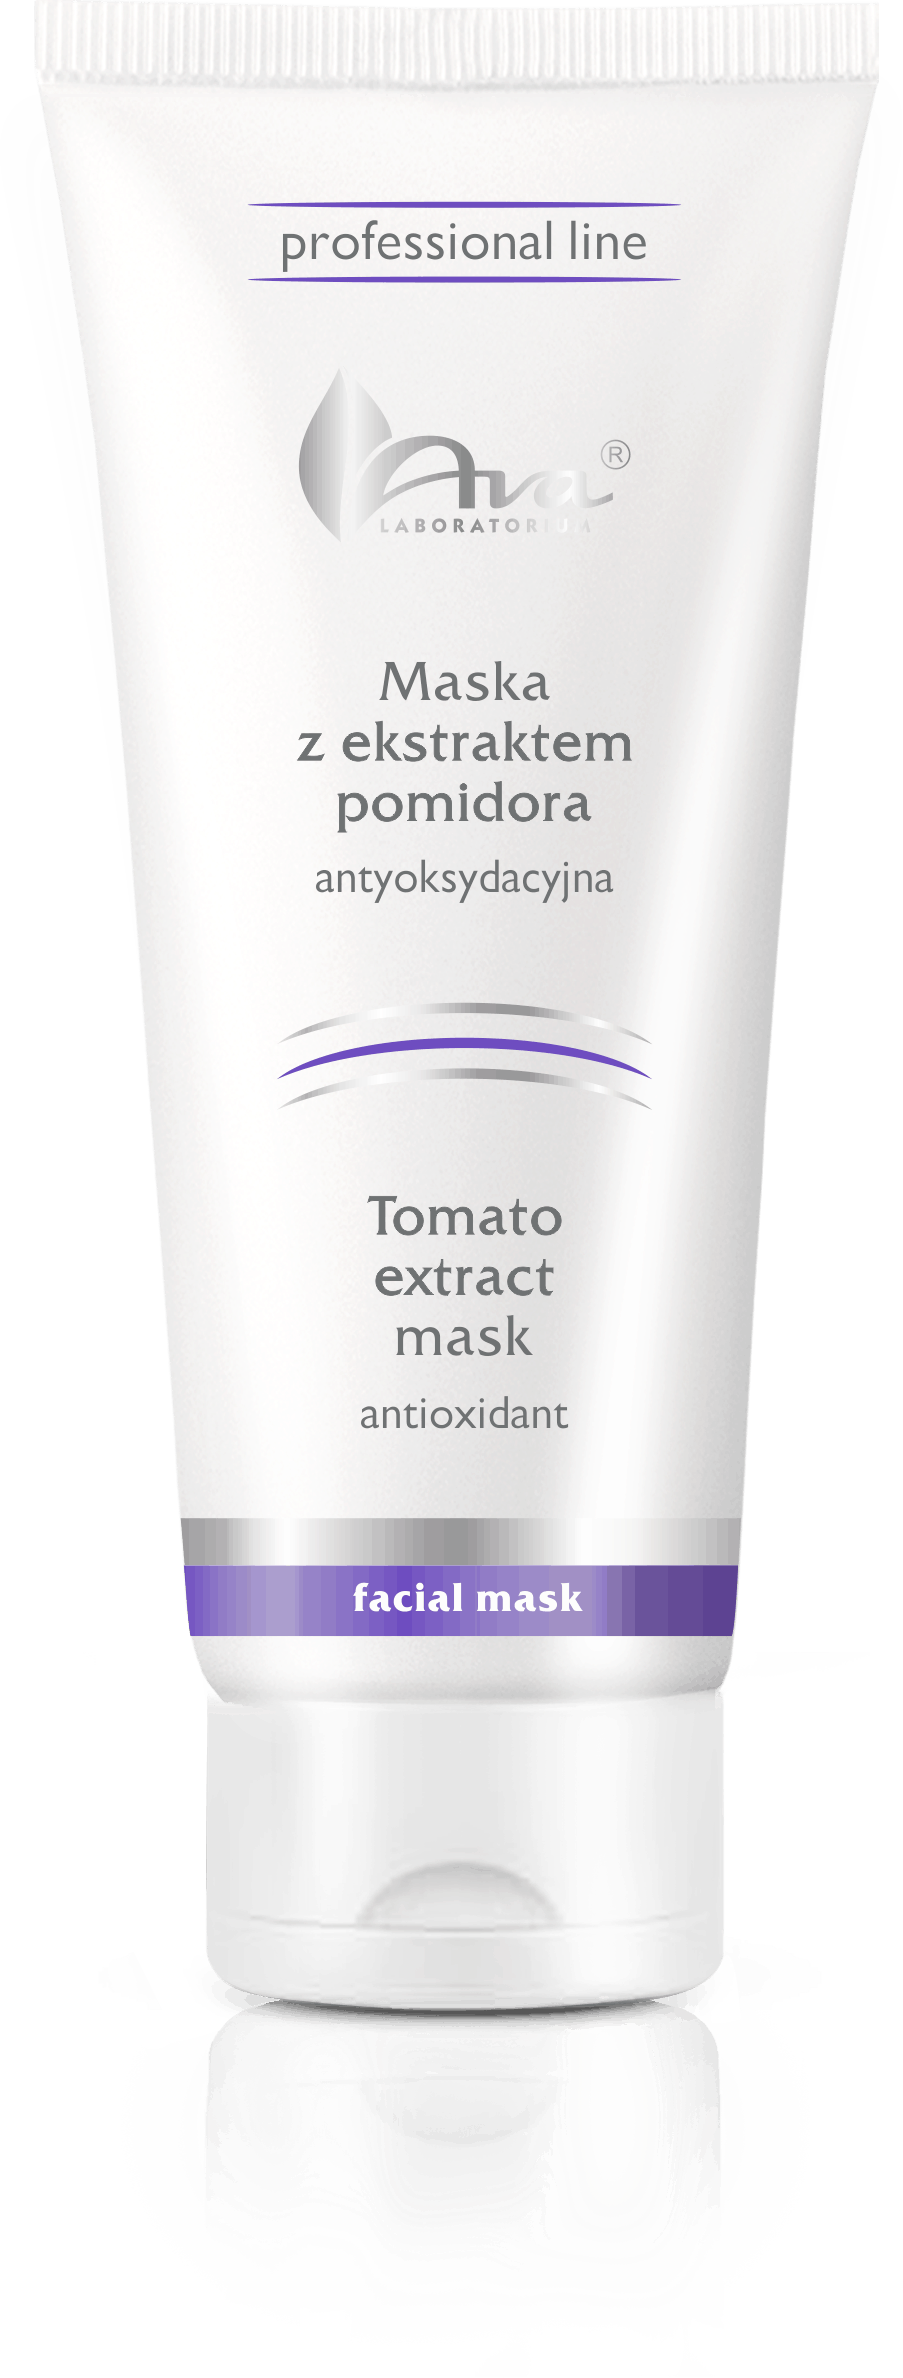 Tomato extract mask